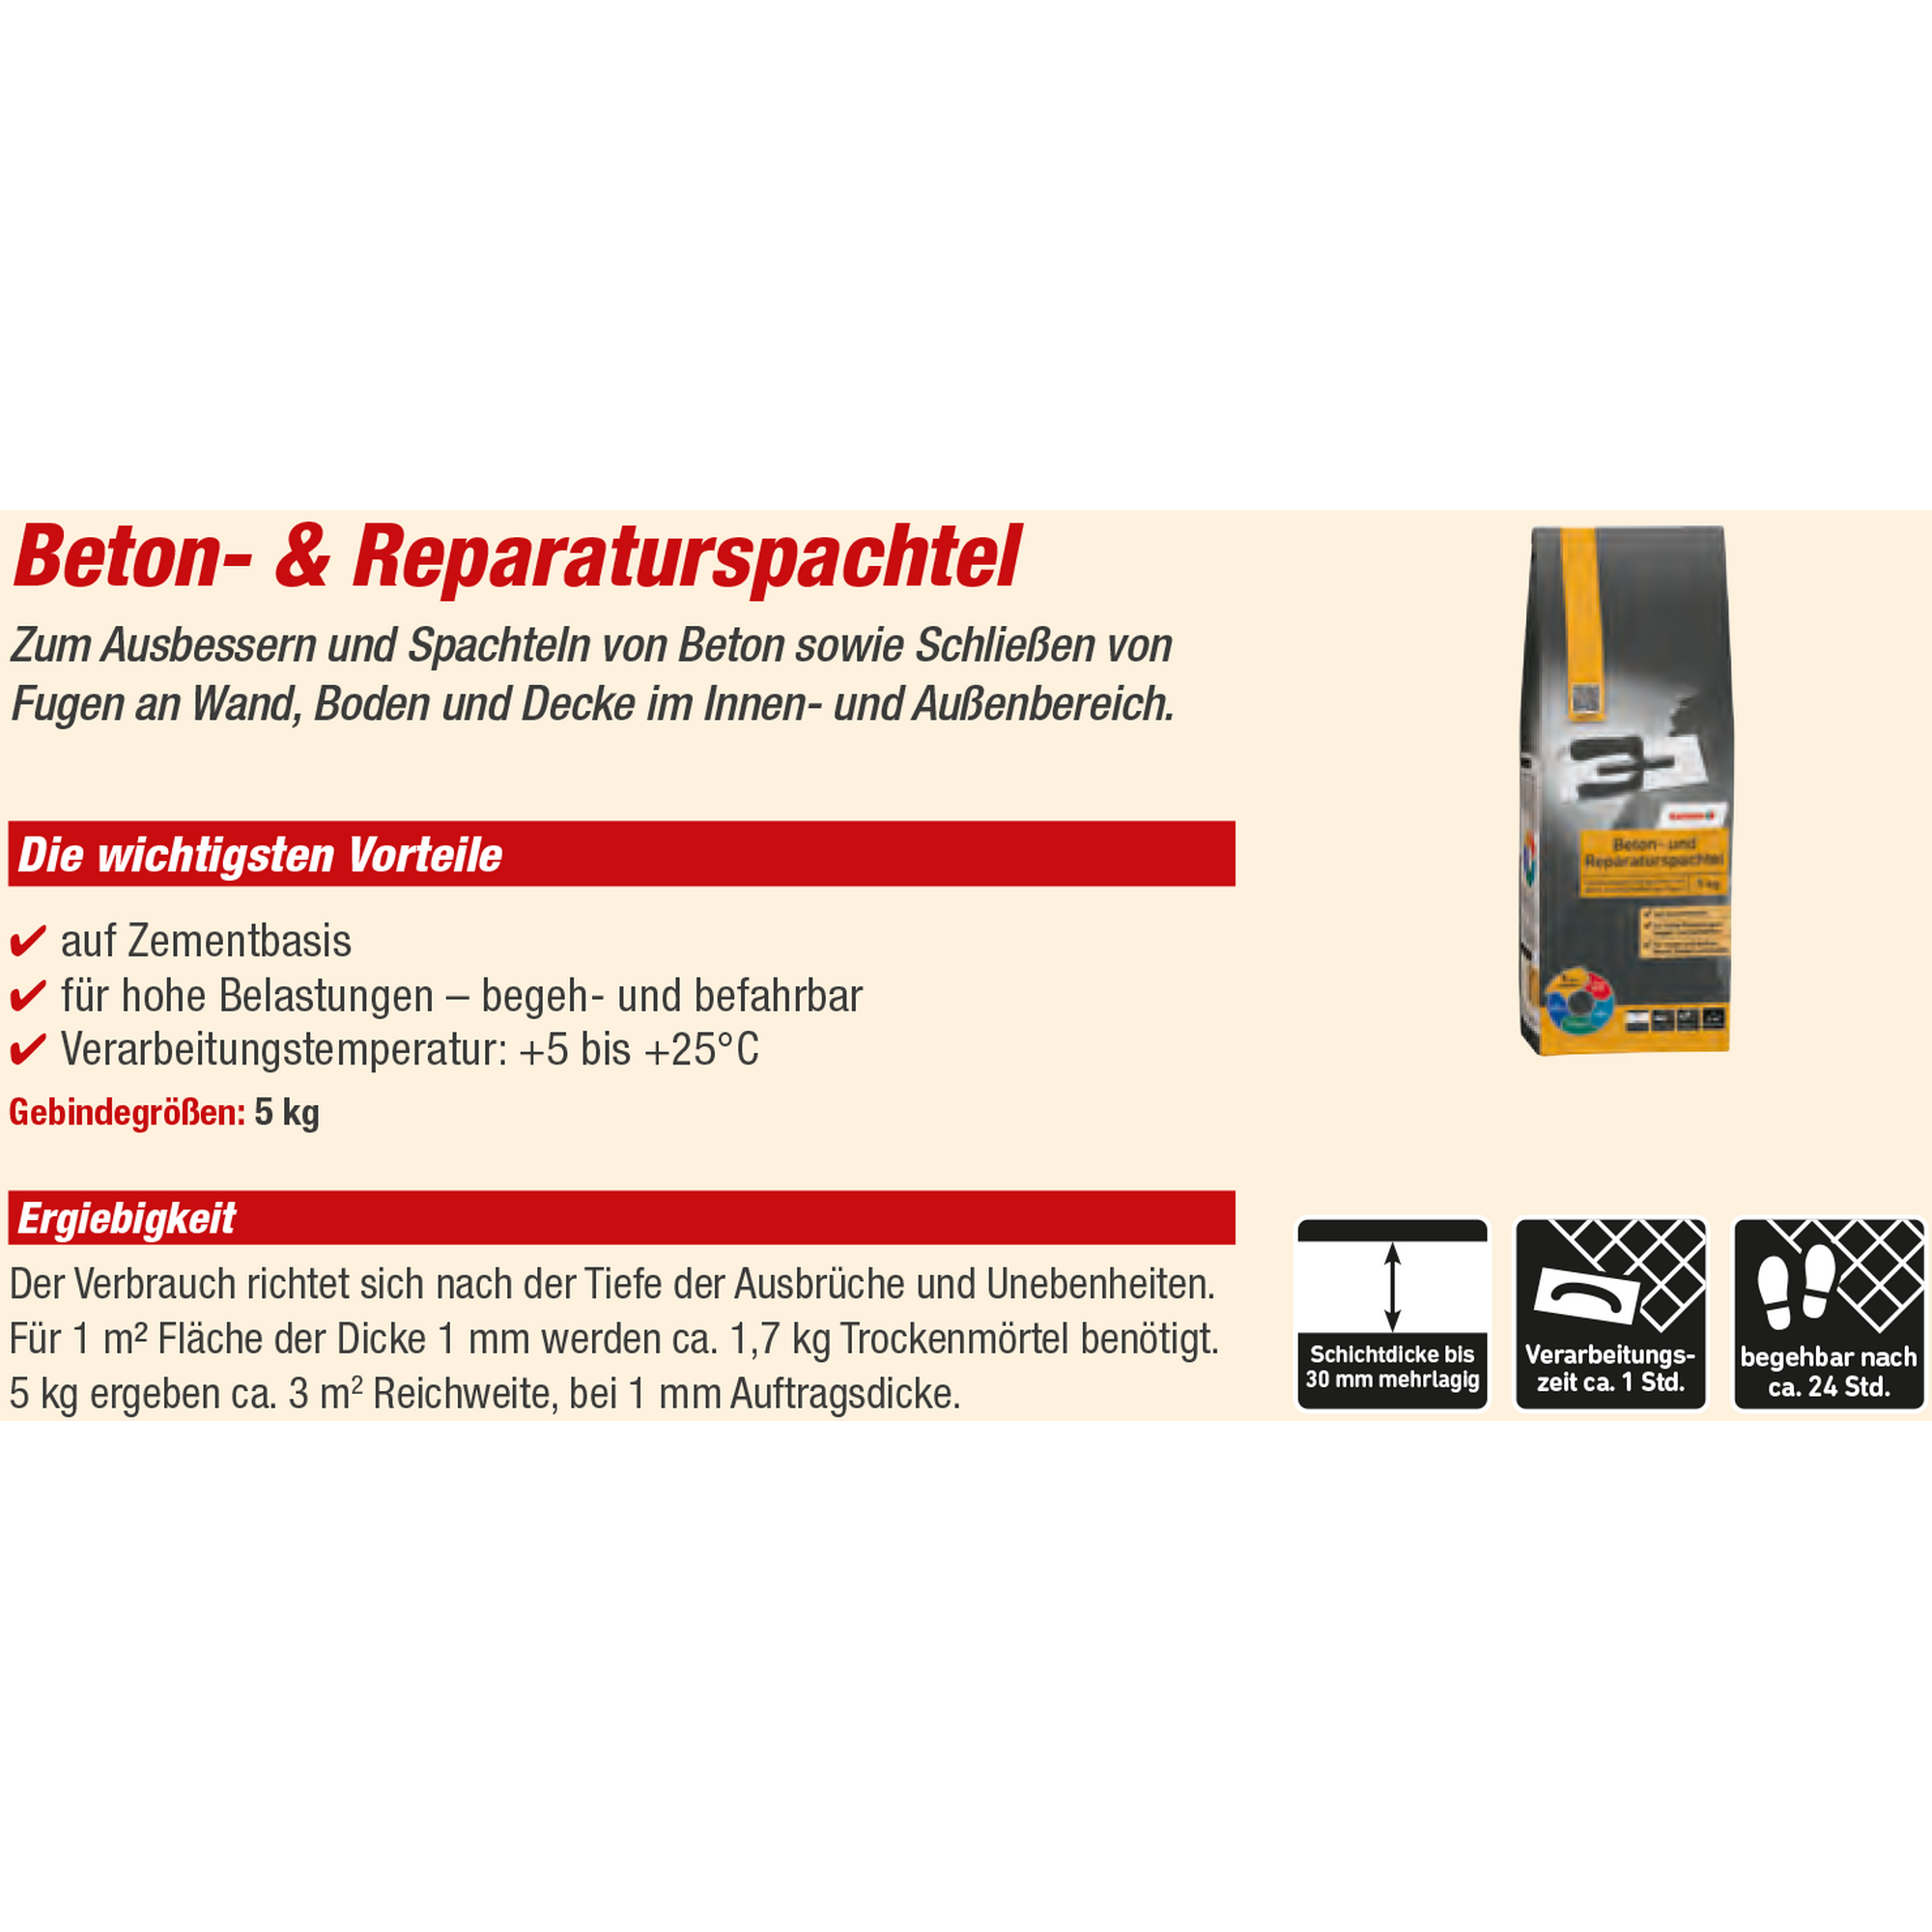 Beton- und Reparaturspachtel 5 kg + product picture